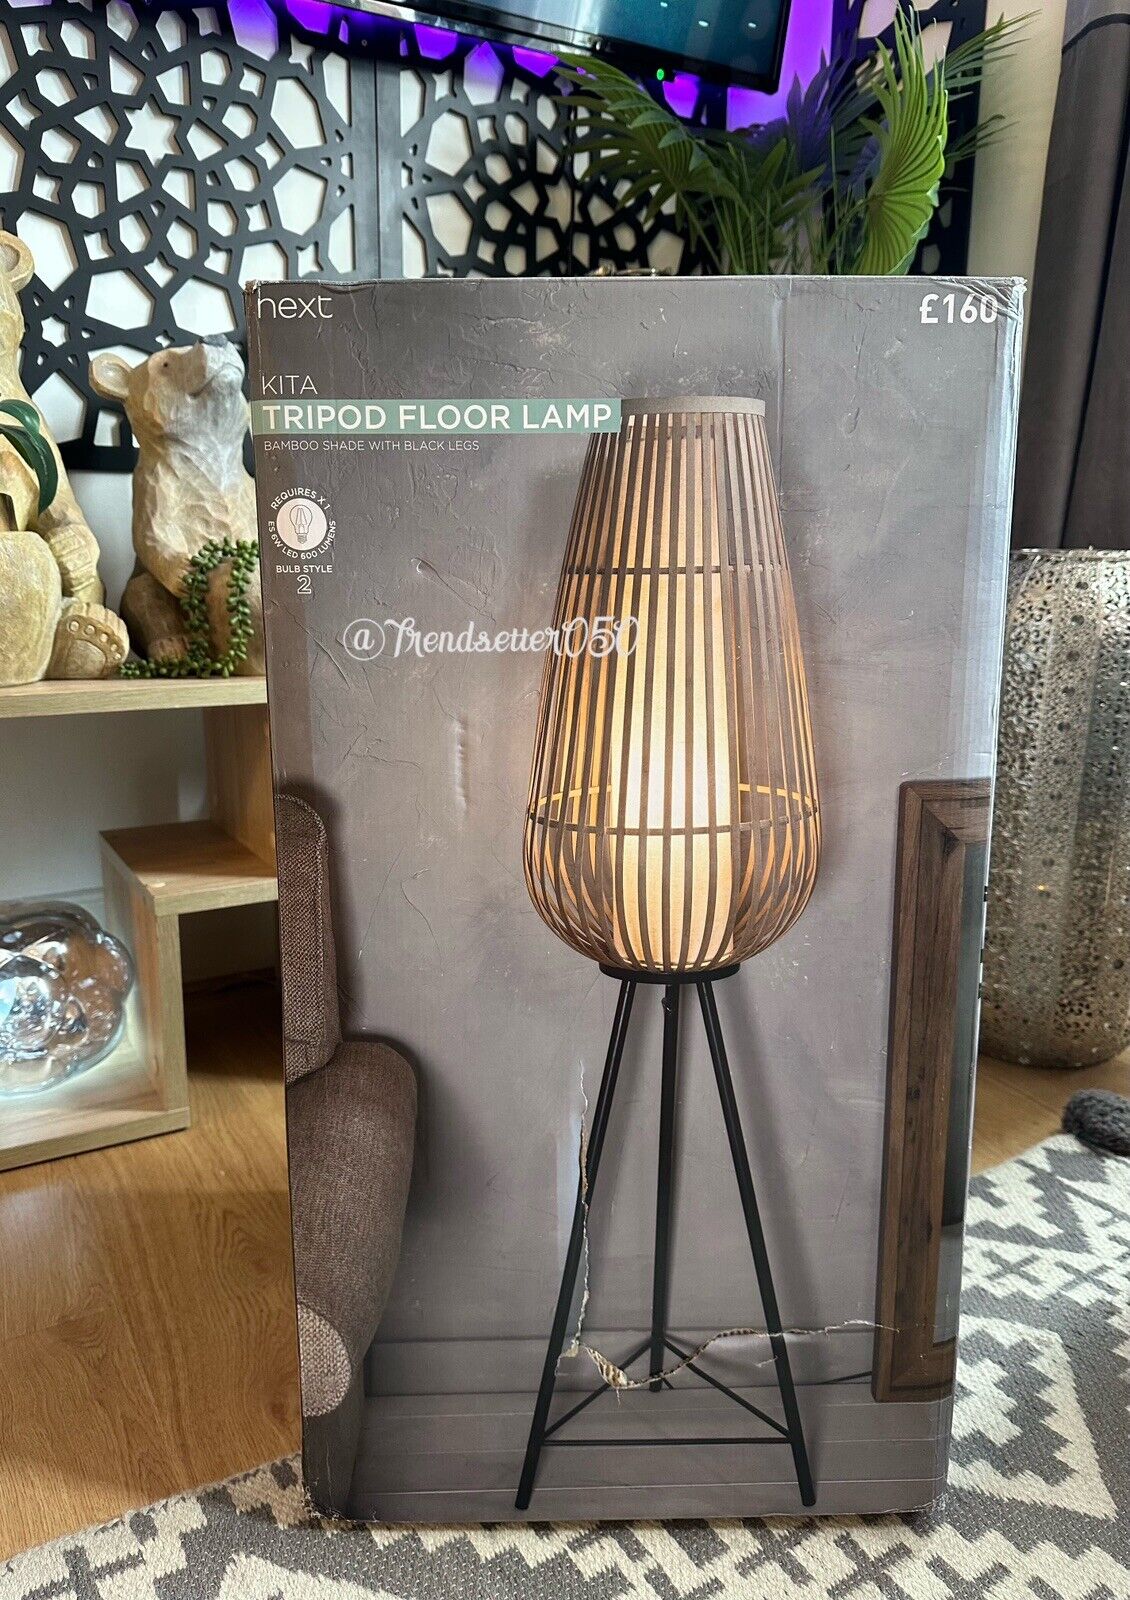 70% Off Deal Next Kita Tripod Floor Lamp Bamboo Shade Black Legs Home Decor £160